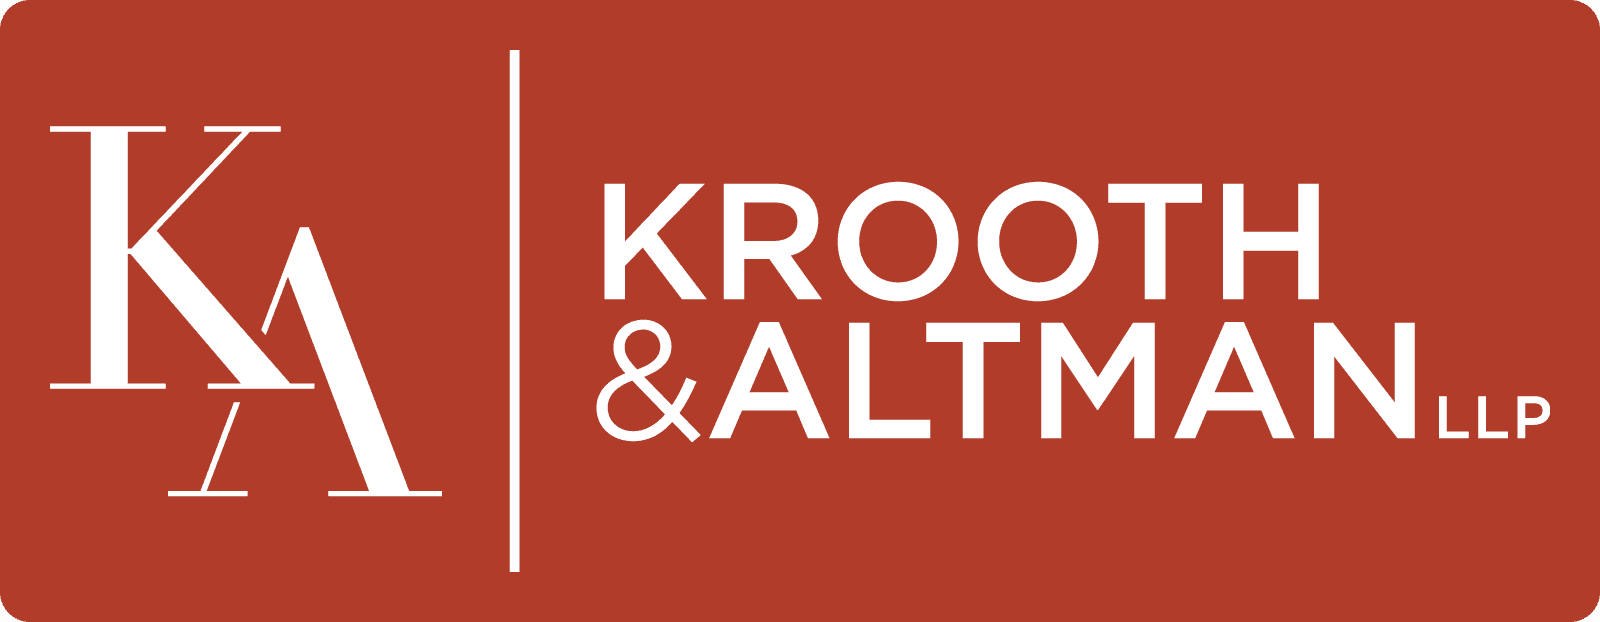 krooth_logo_white-bg